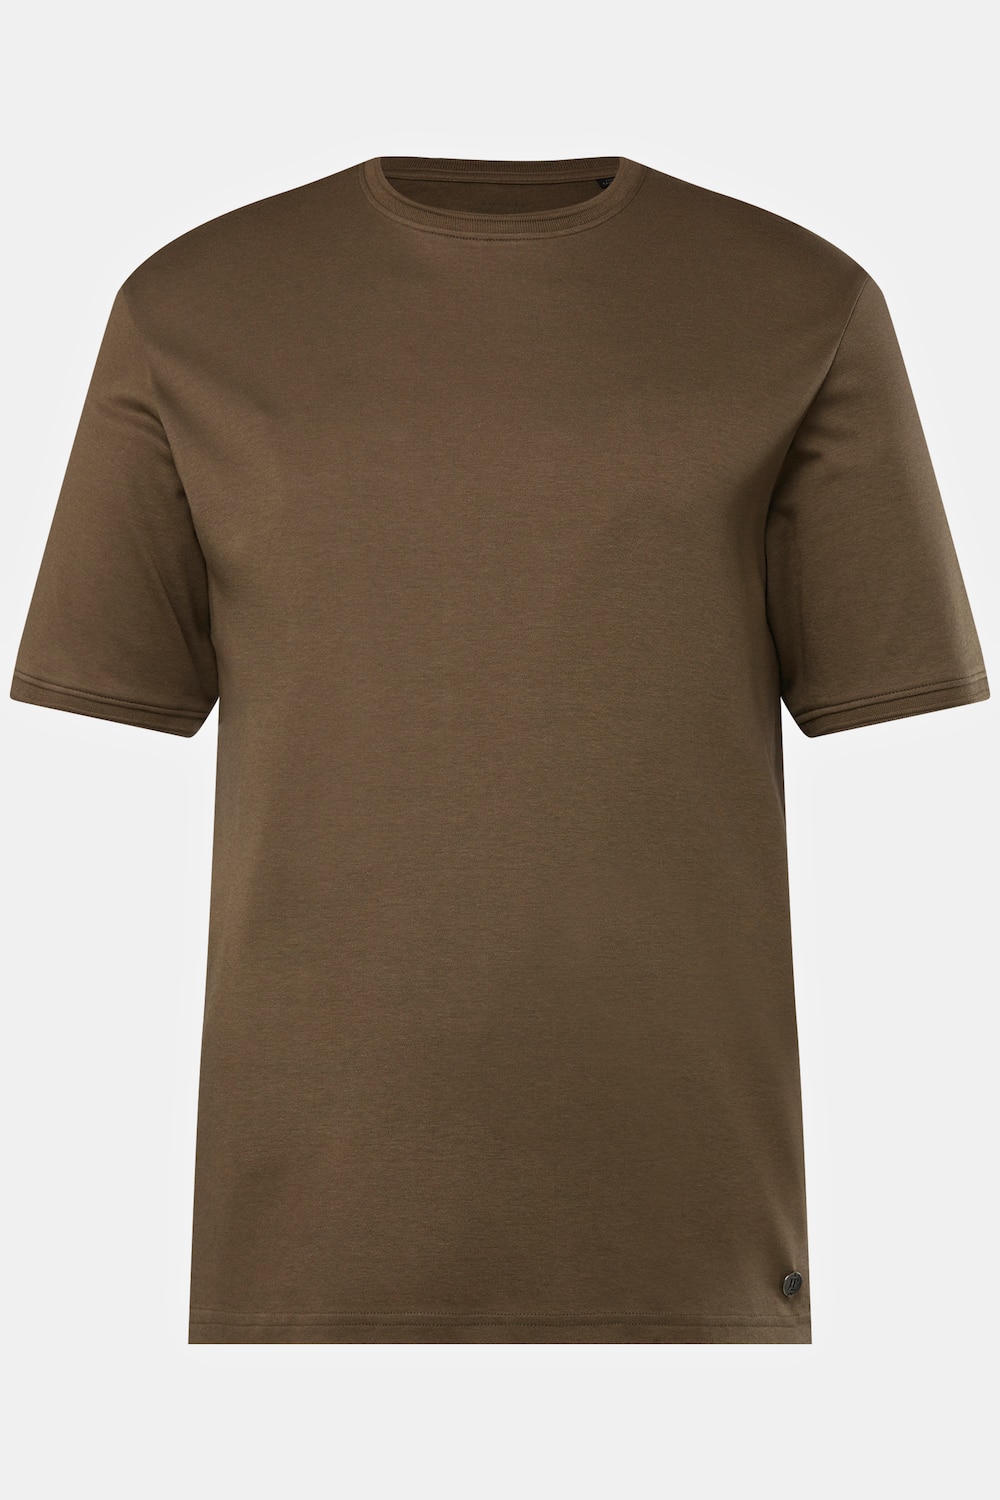 Grote Maten T-shirt, Heren, bruin, Maat: 6XL, Katoen/Viscose, JP1880